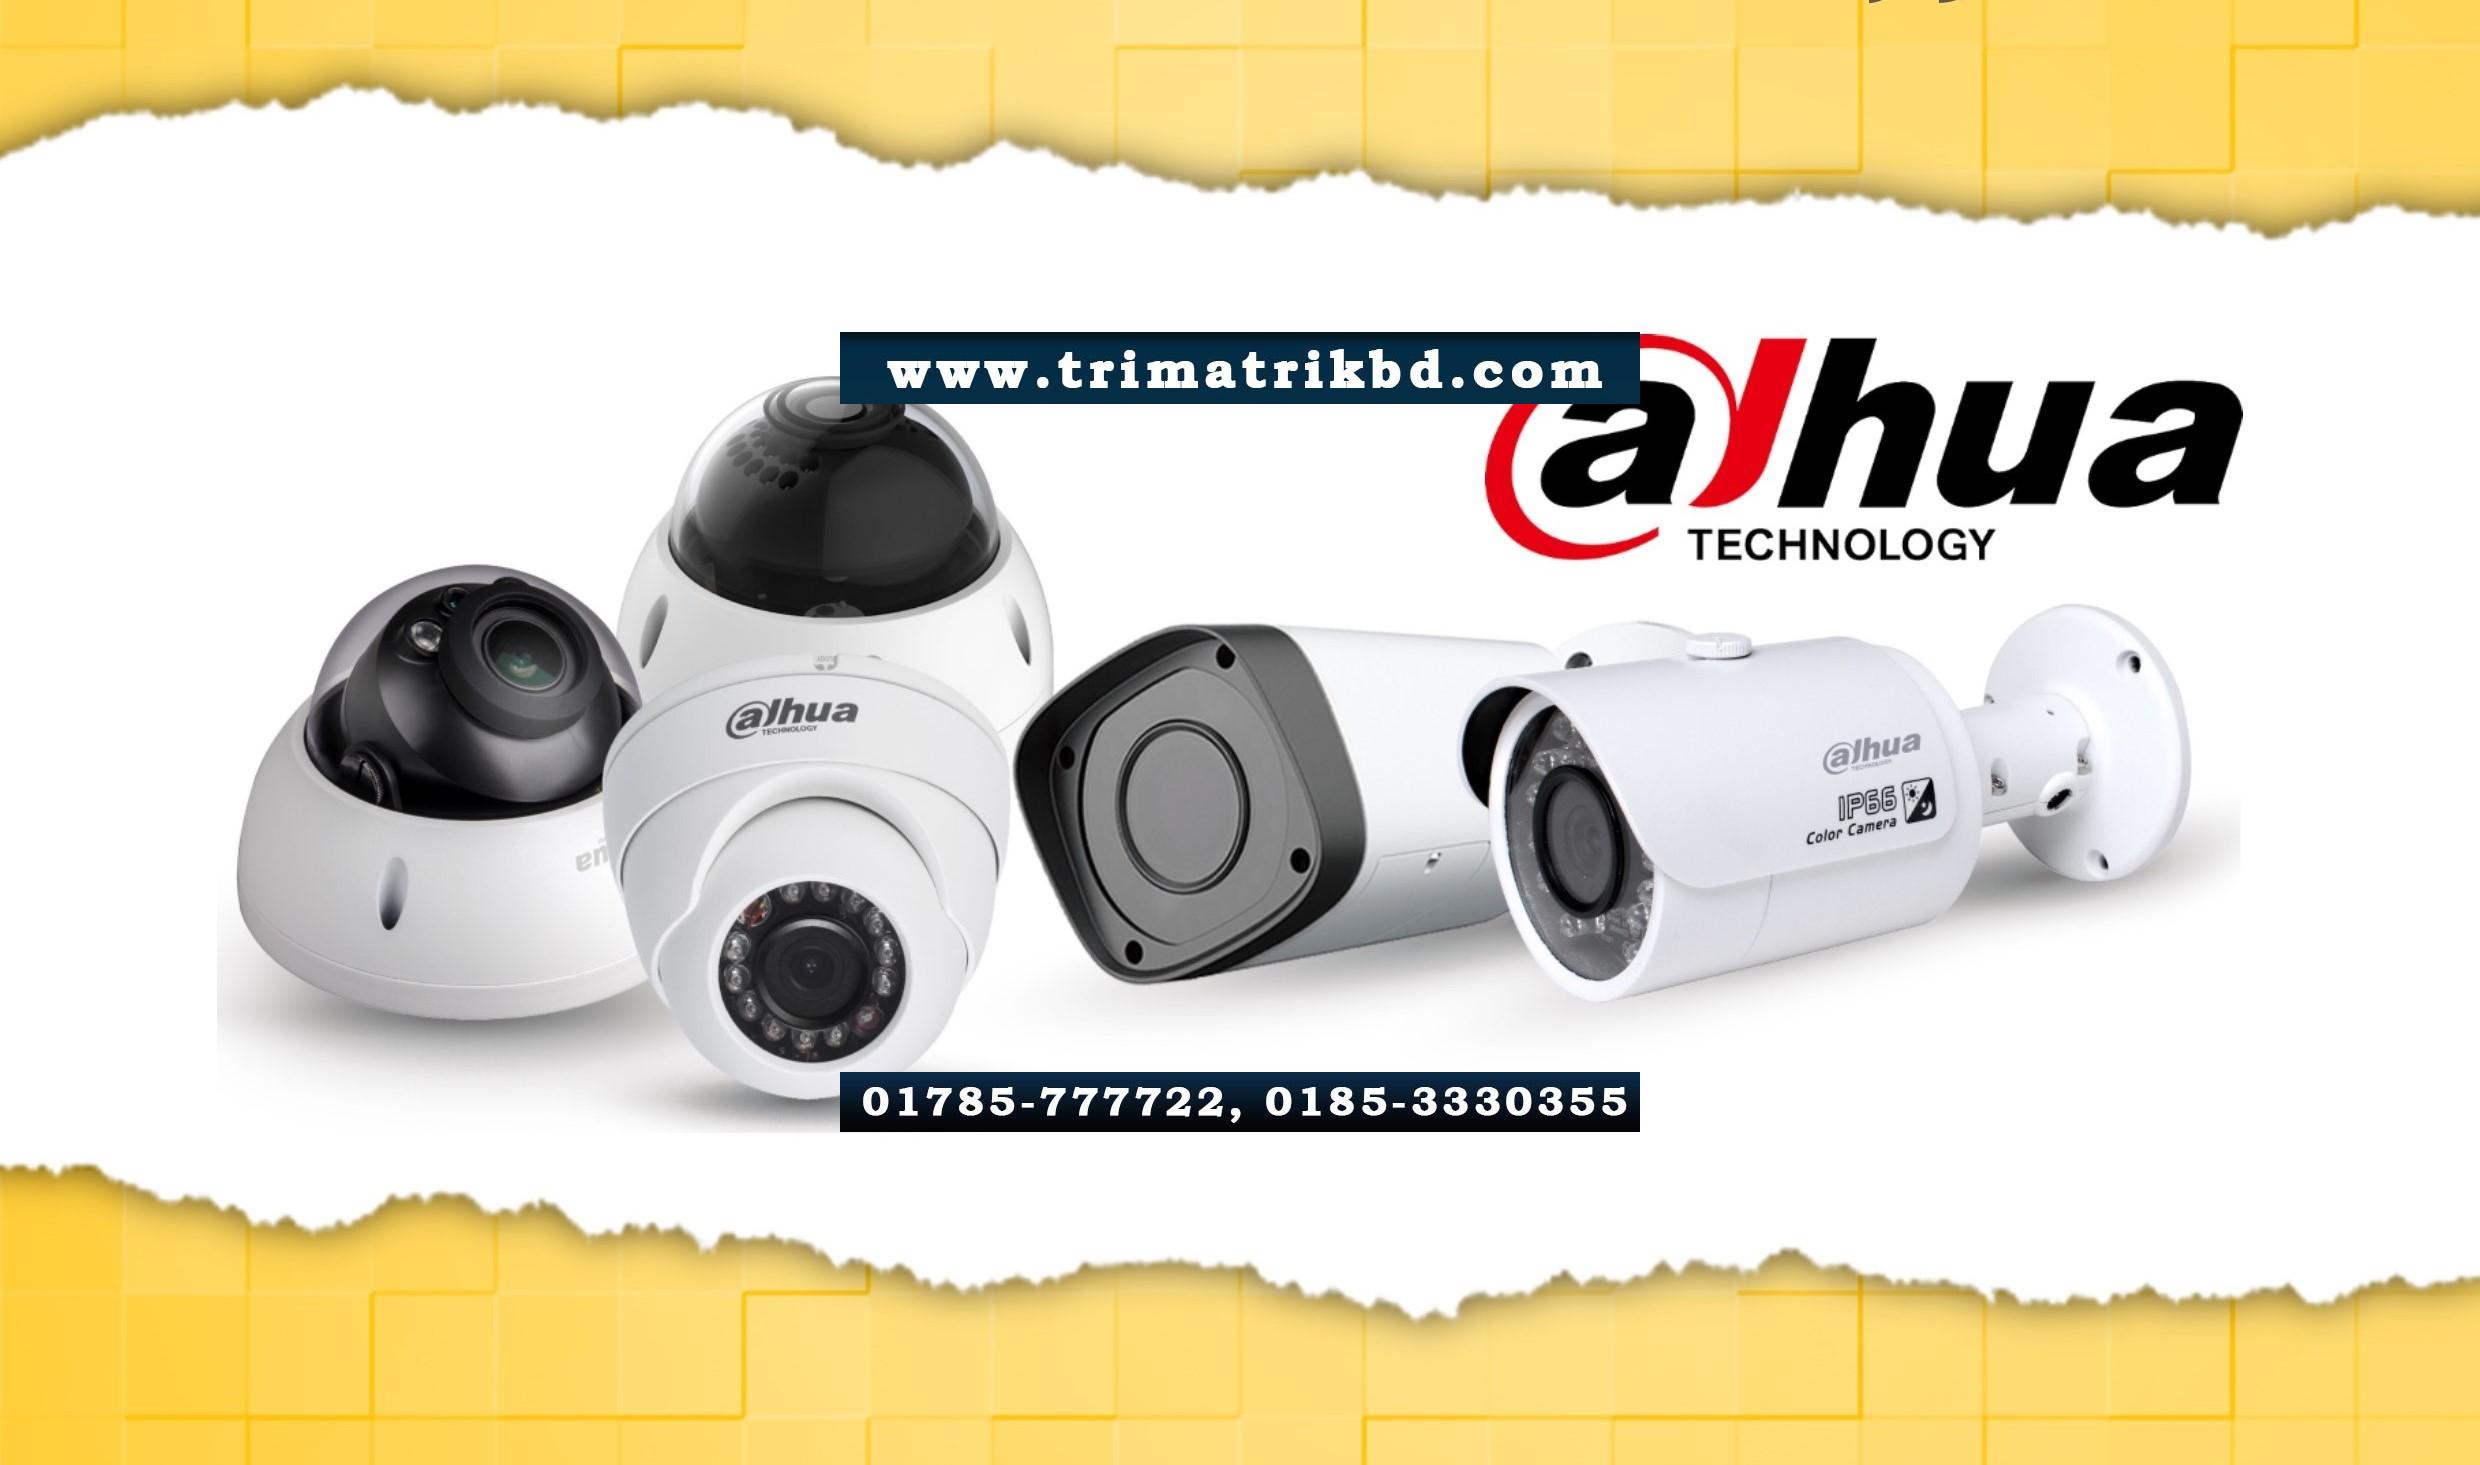 Dahua CCTV Camera Supplier in Bangladesh - Get the Best Price From Trimatrik Multimedia